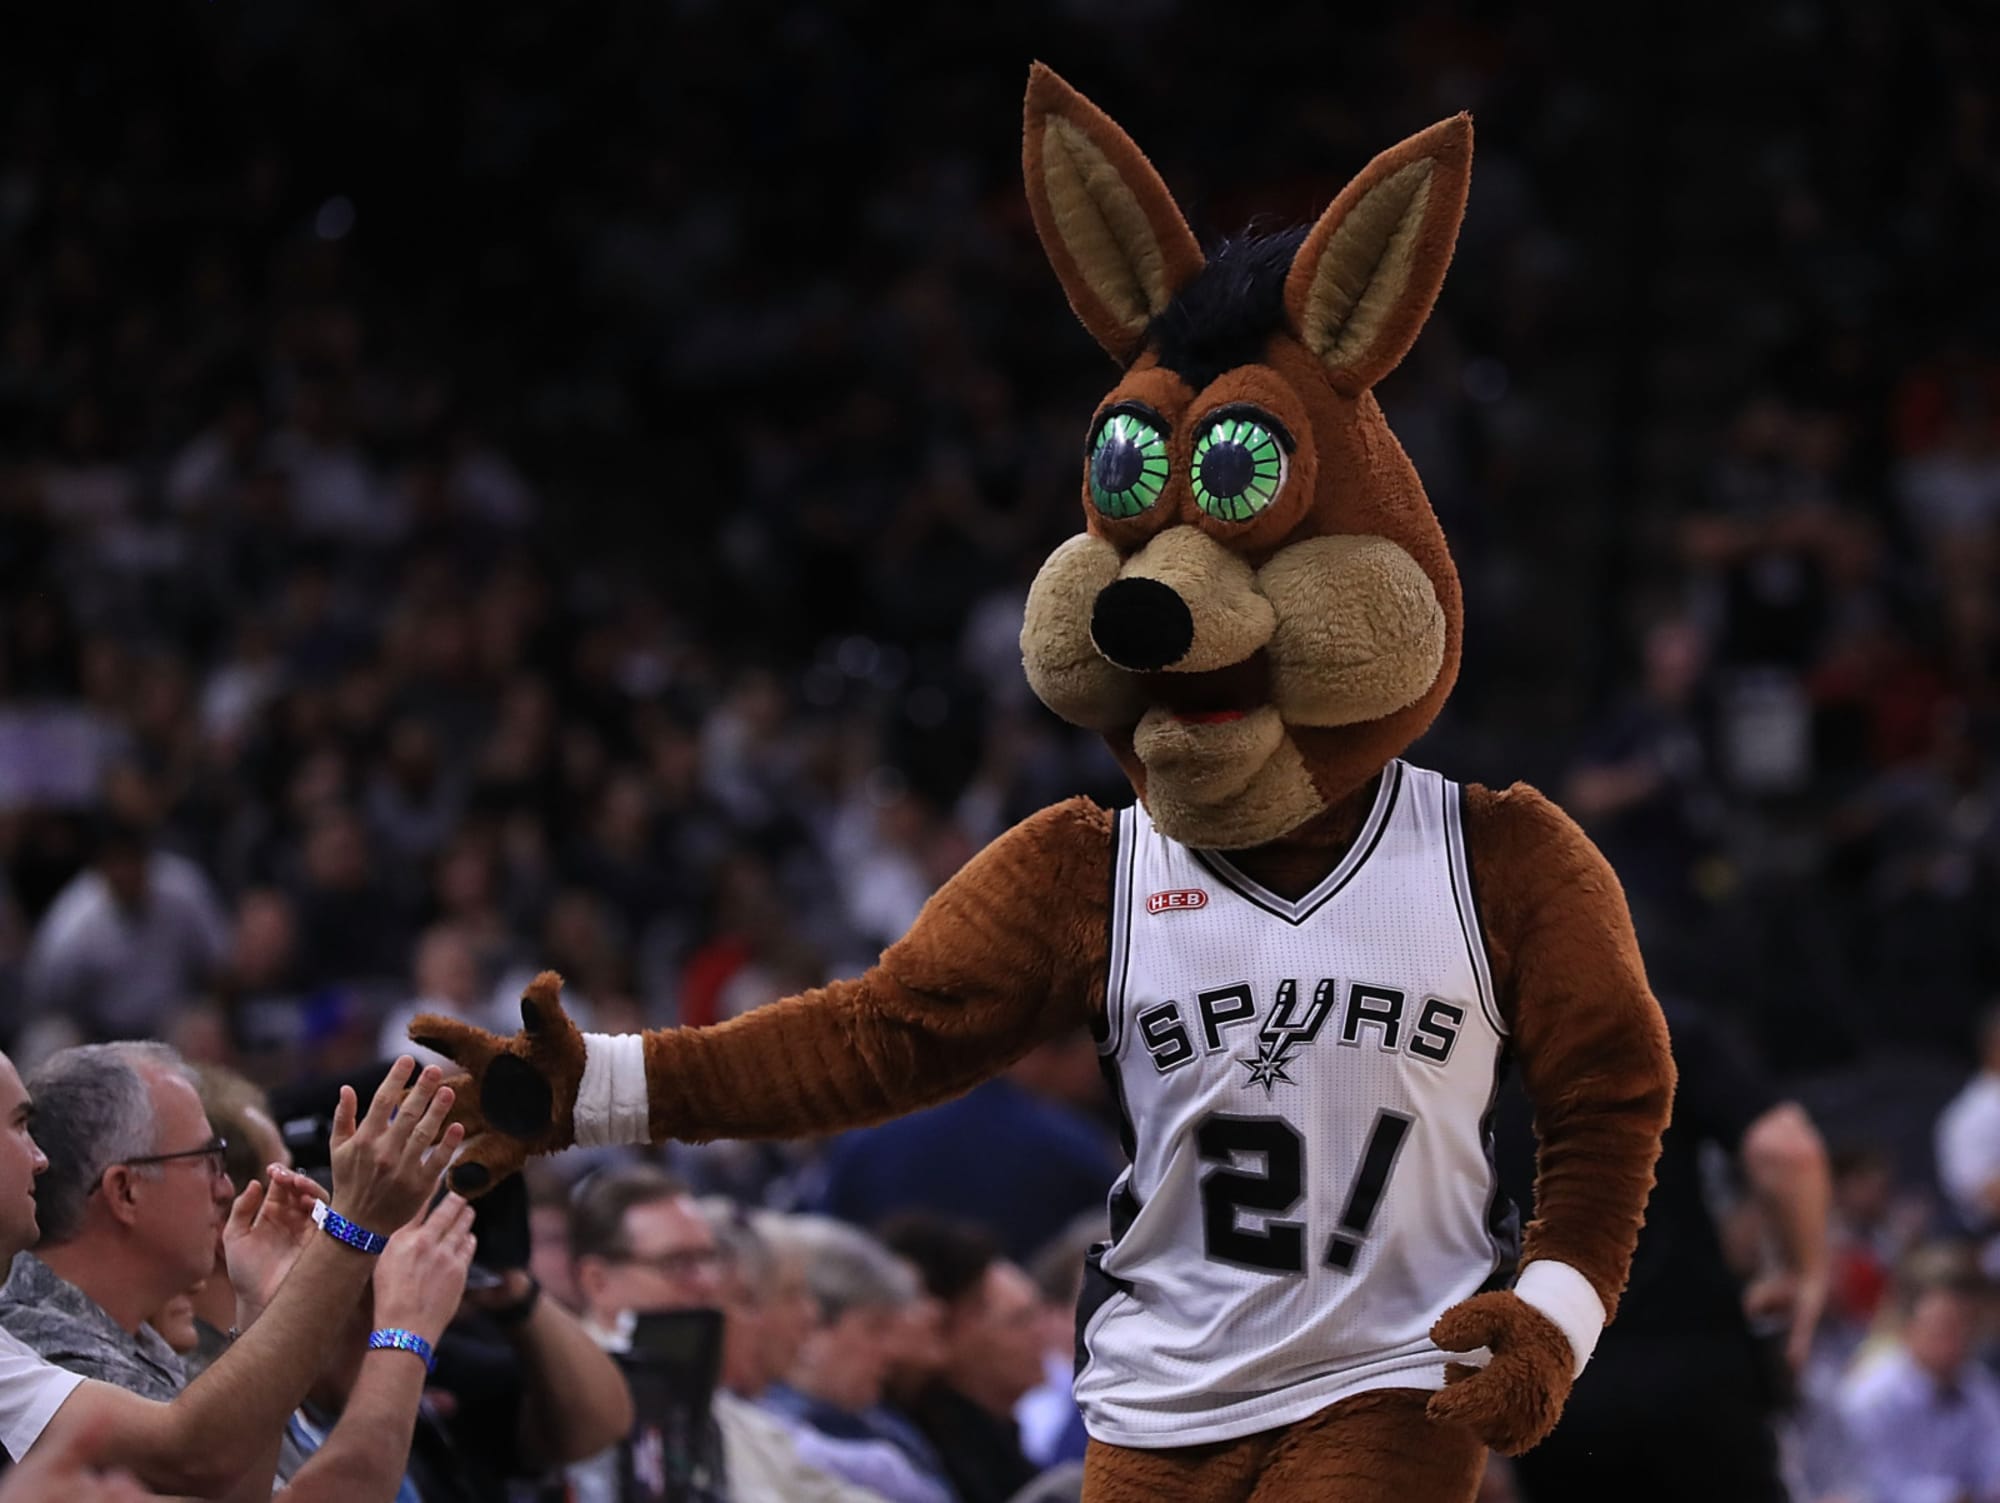 San Antonio Spurs NBA Dog Jersey